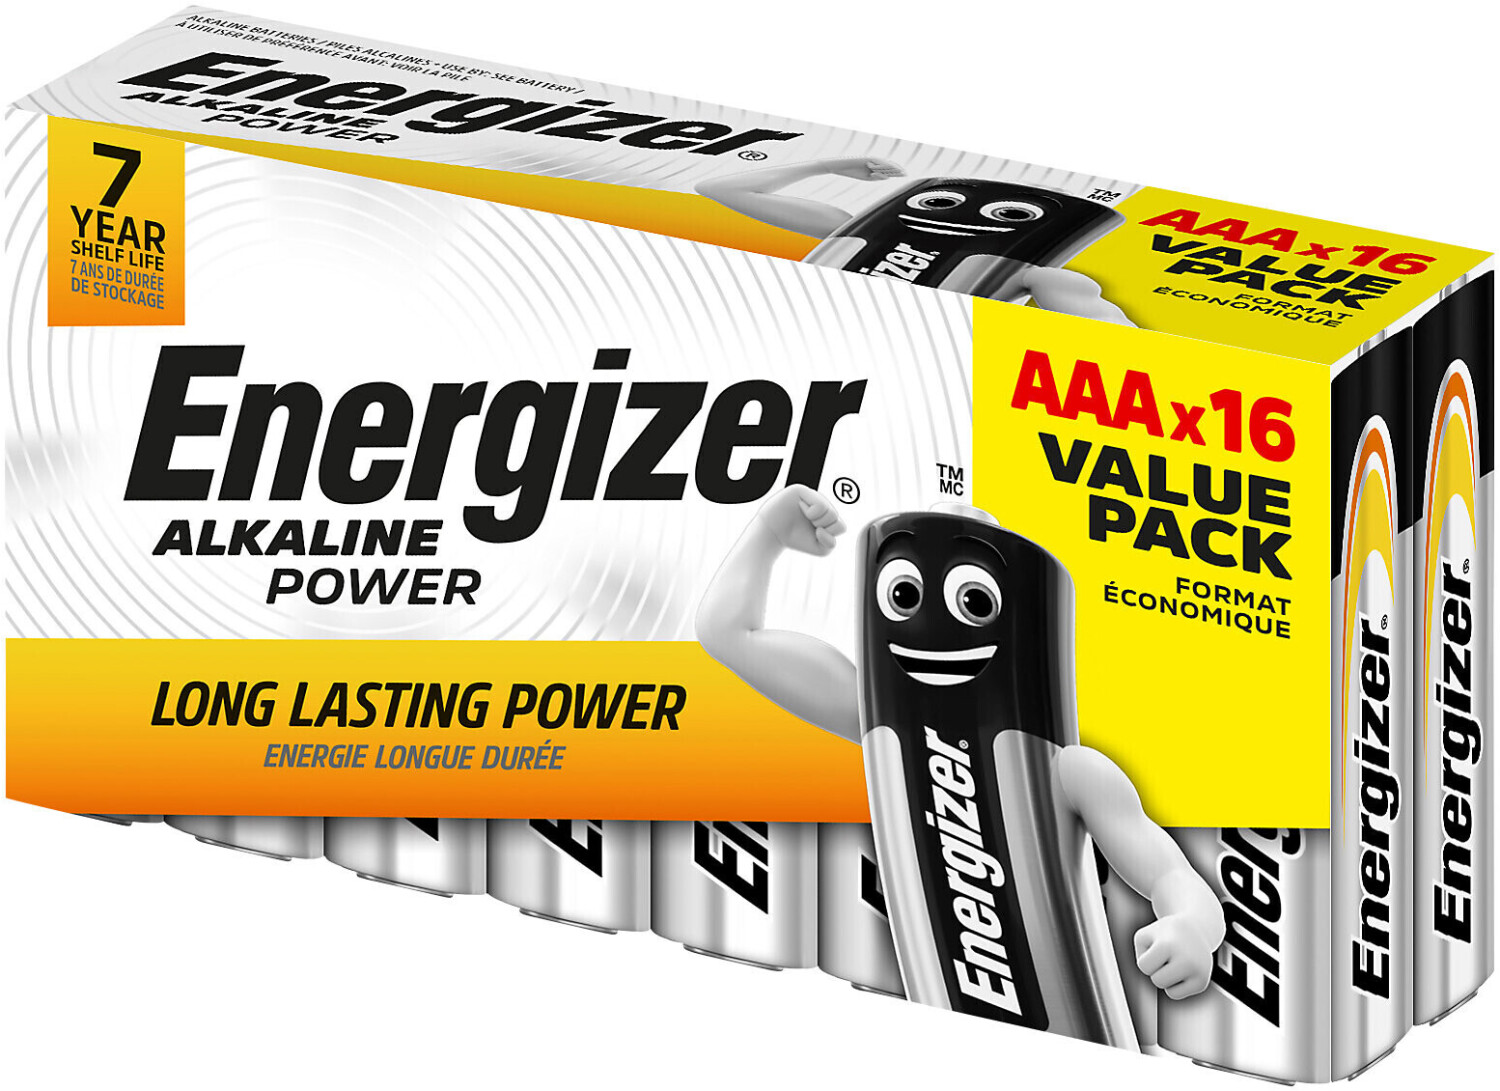 Photos - Battery Energizer Alkaline Power AAA-Micro 16pcs. 